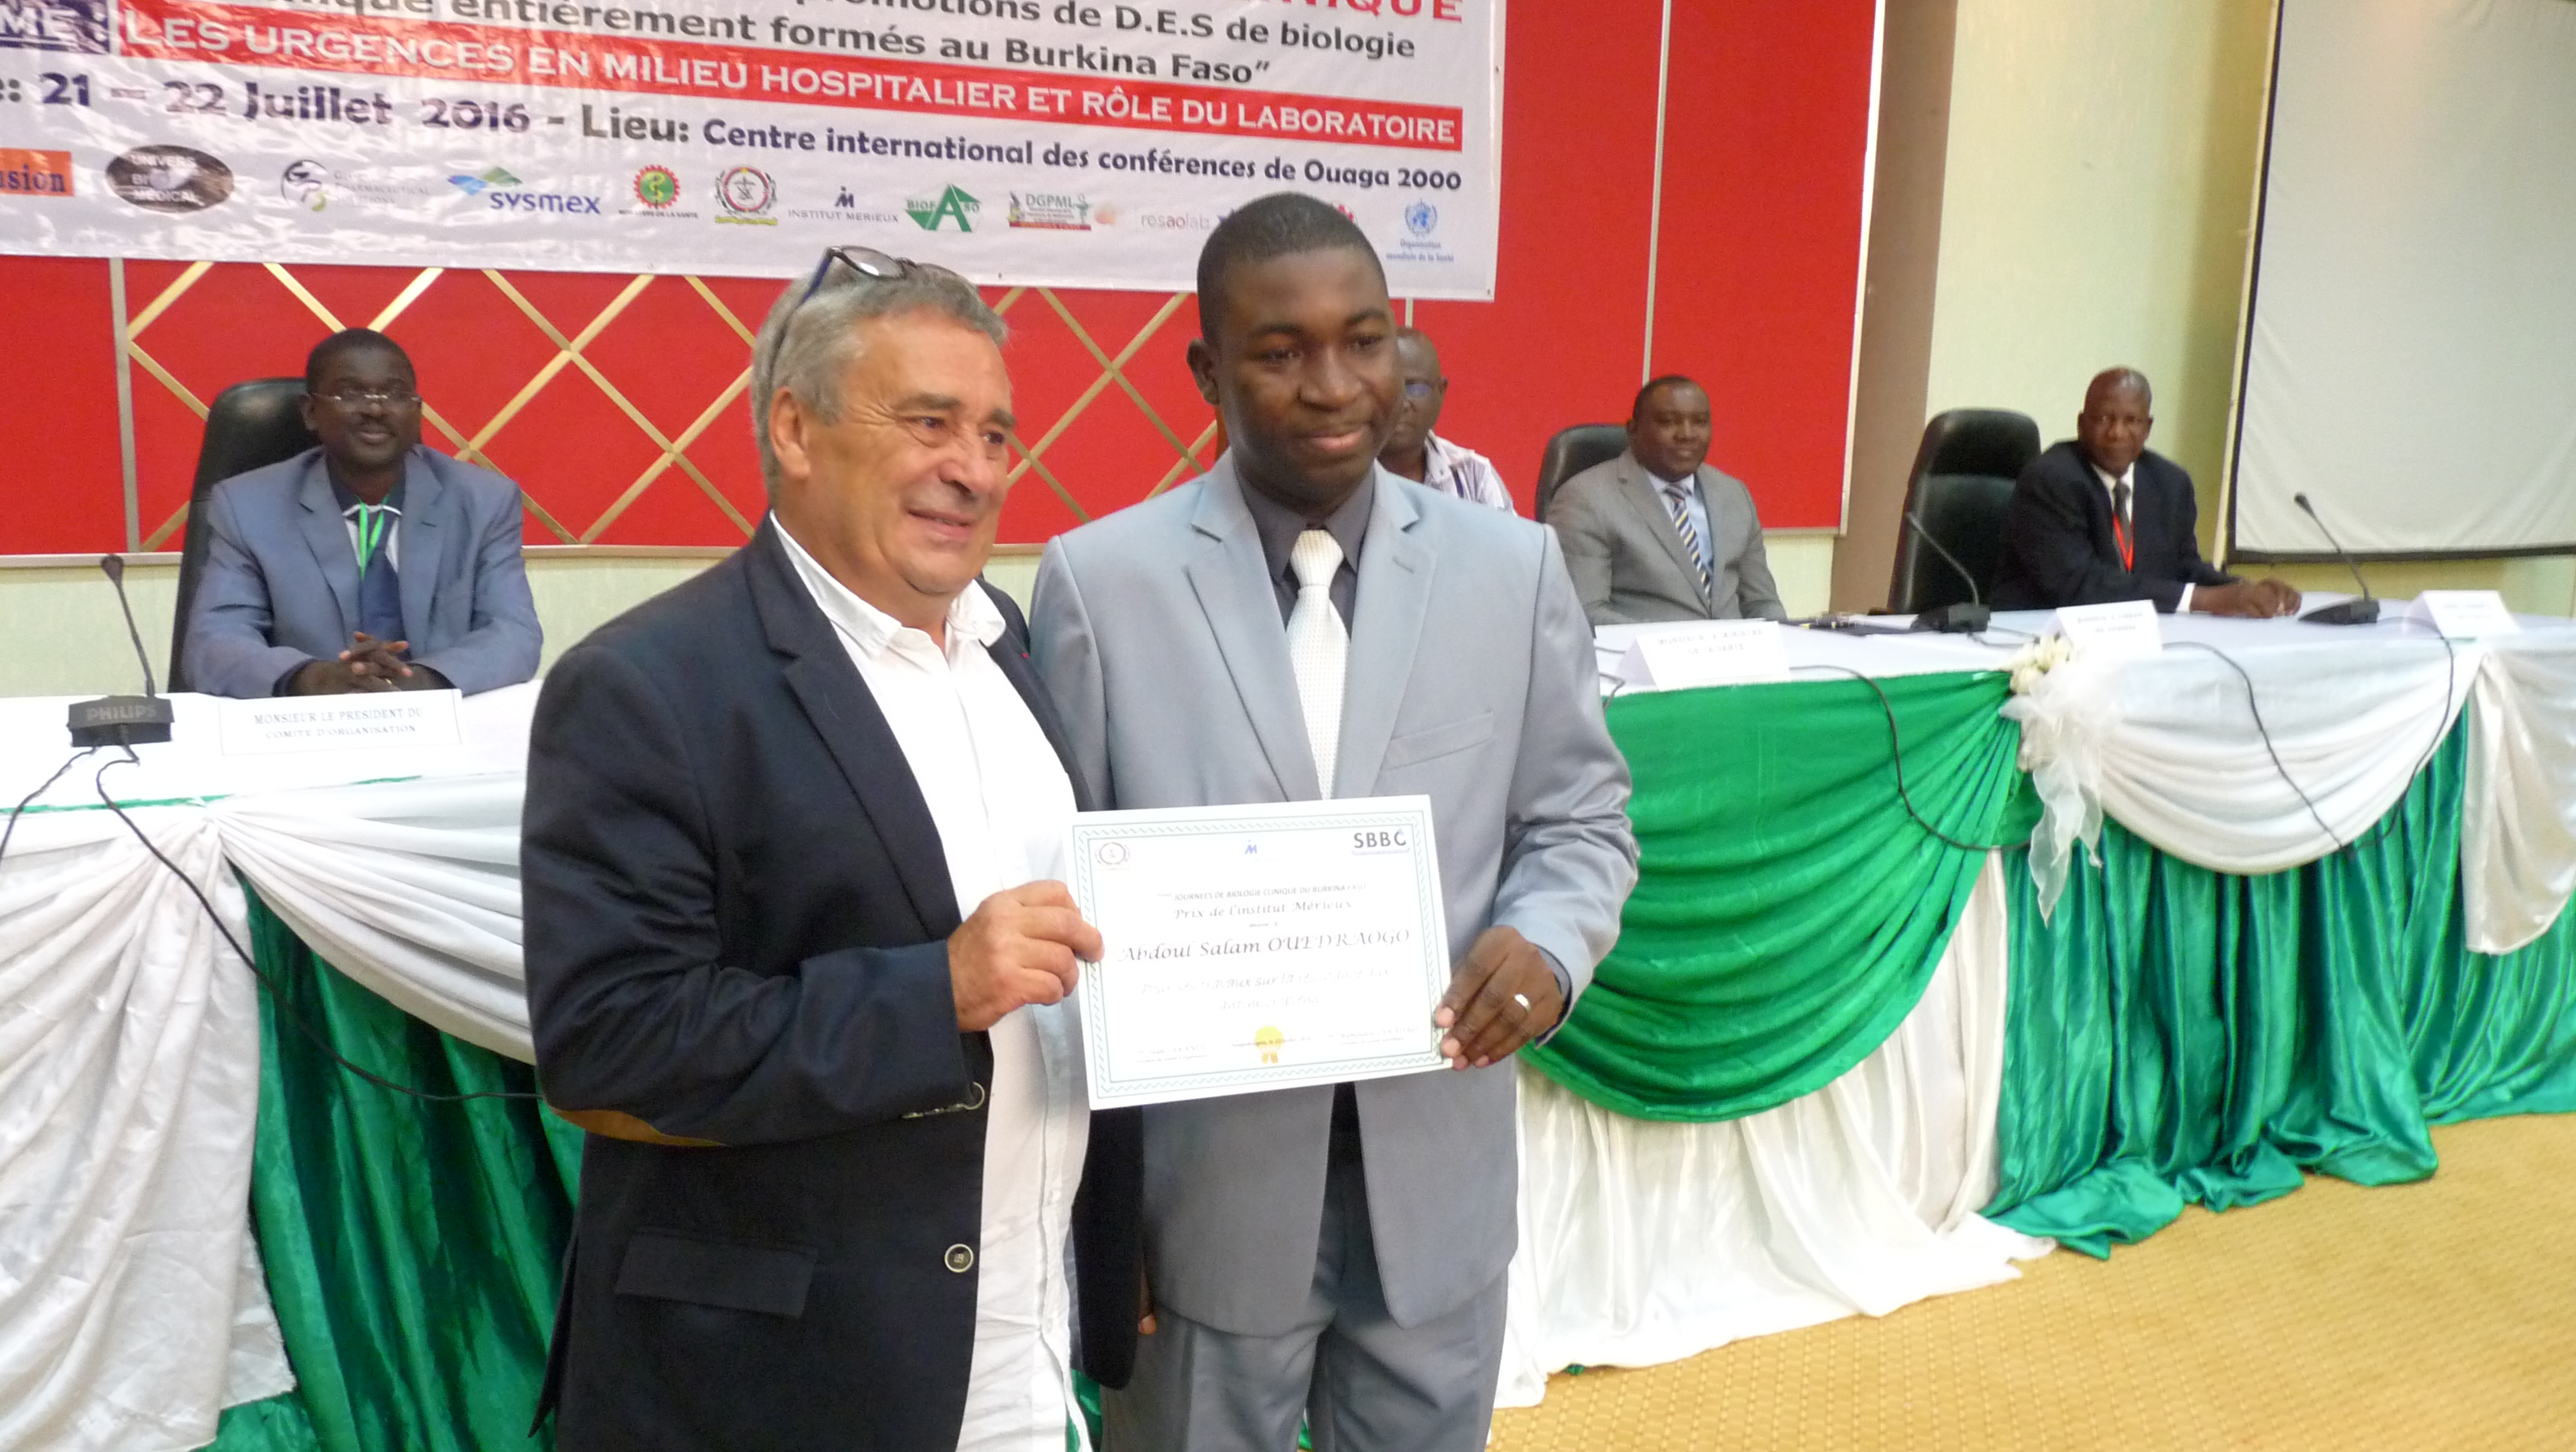 Young Investigators Awards - Burkina Faso 2016